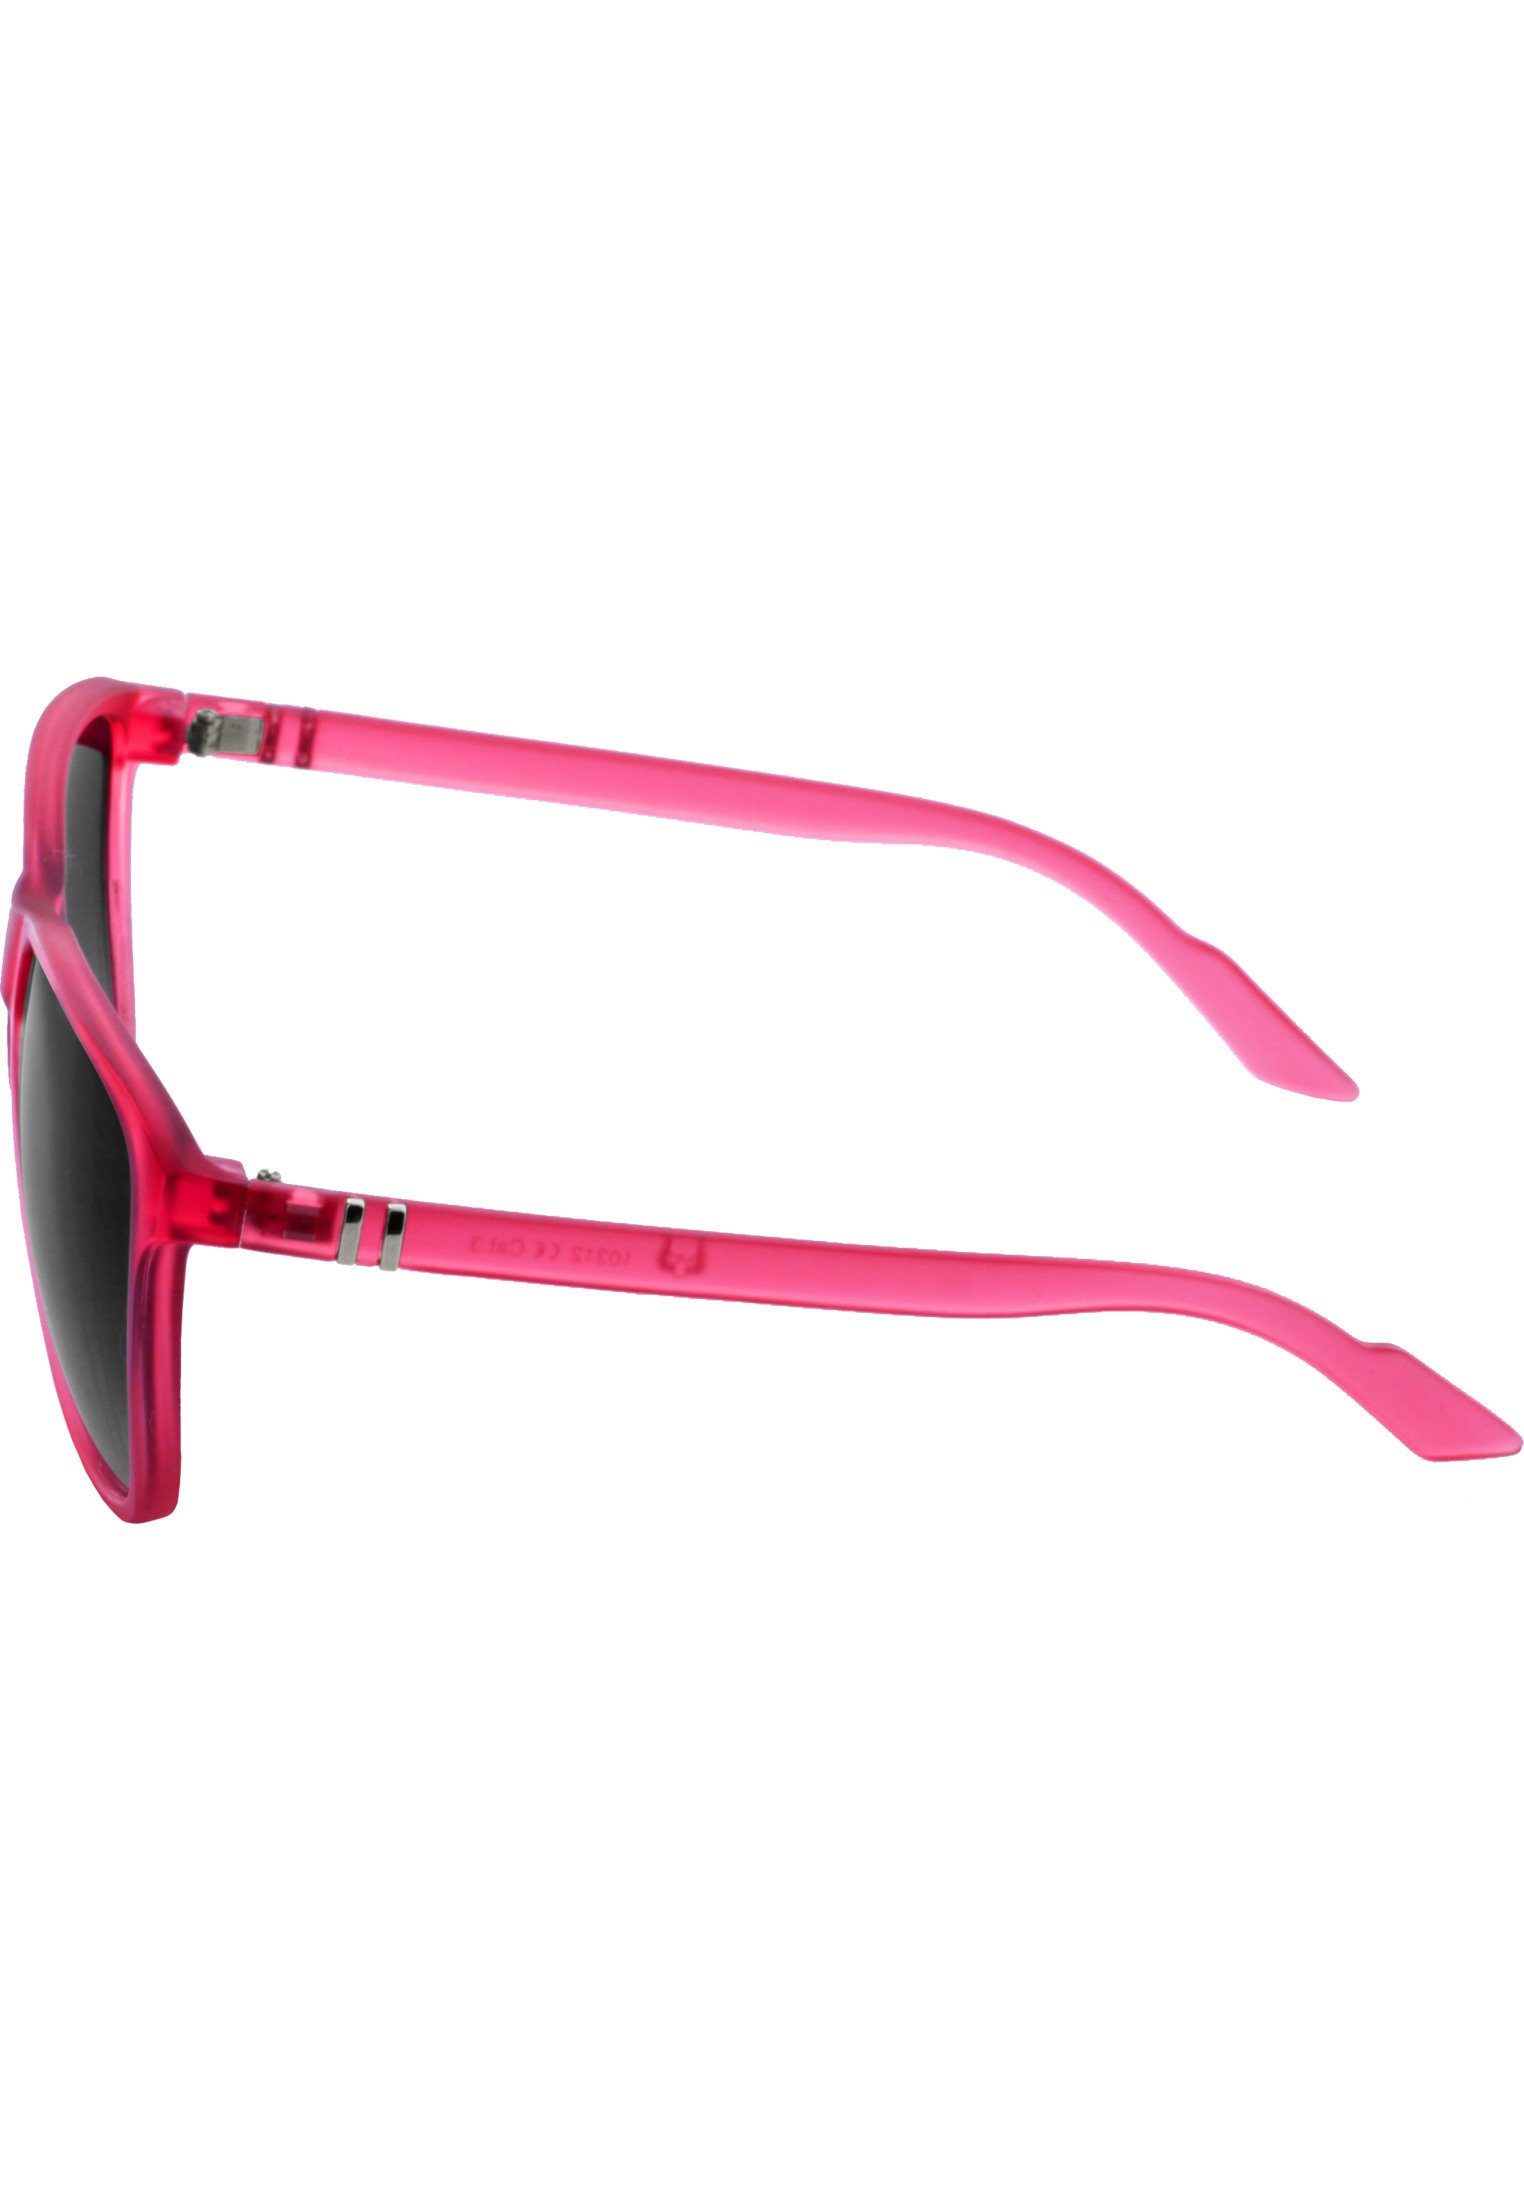 MSTRDS Sonnenbrille Sunglasses Accessoires neonpink Chirwa